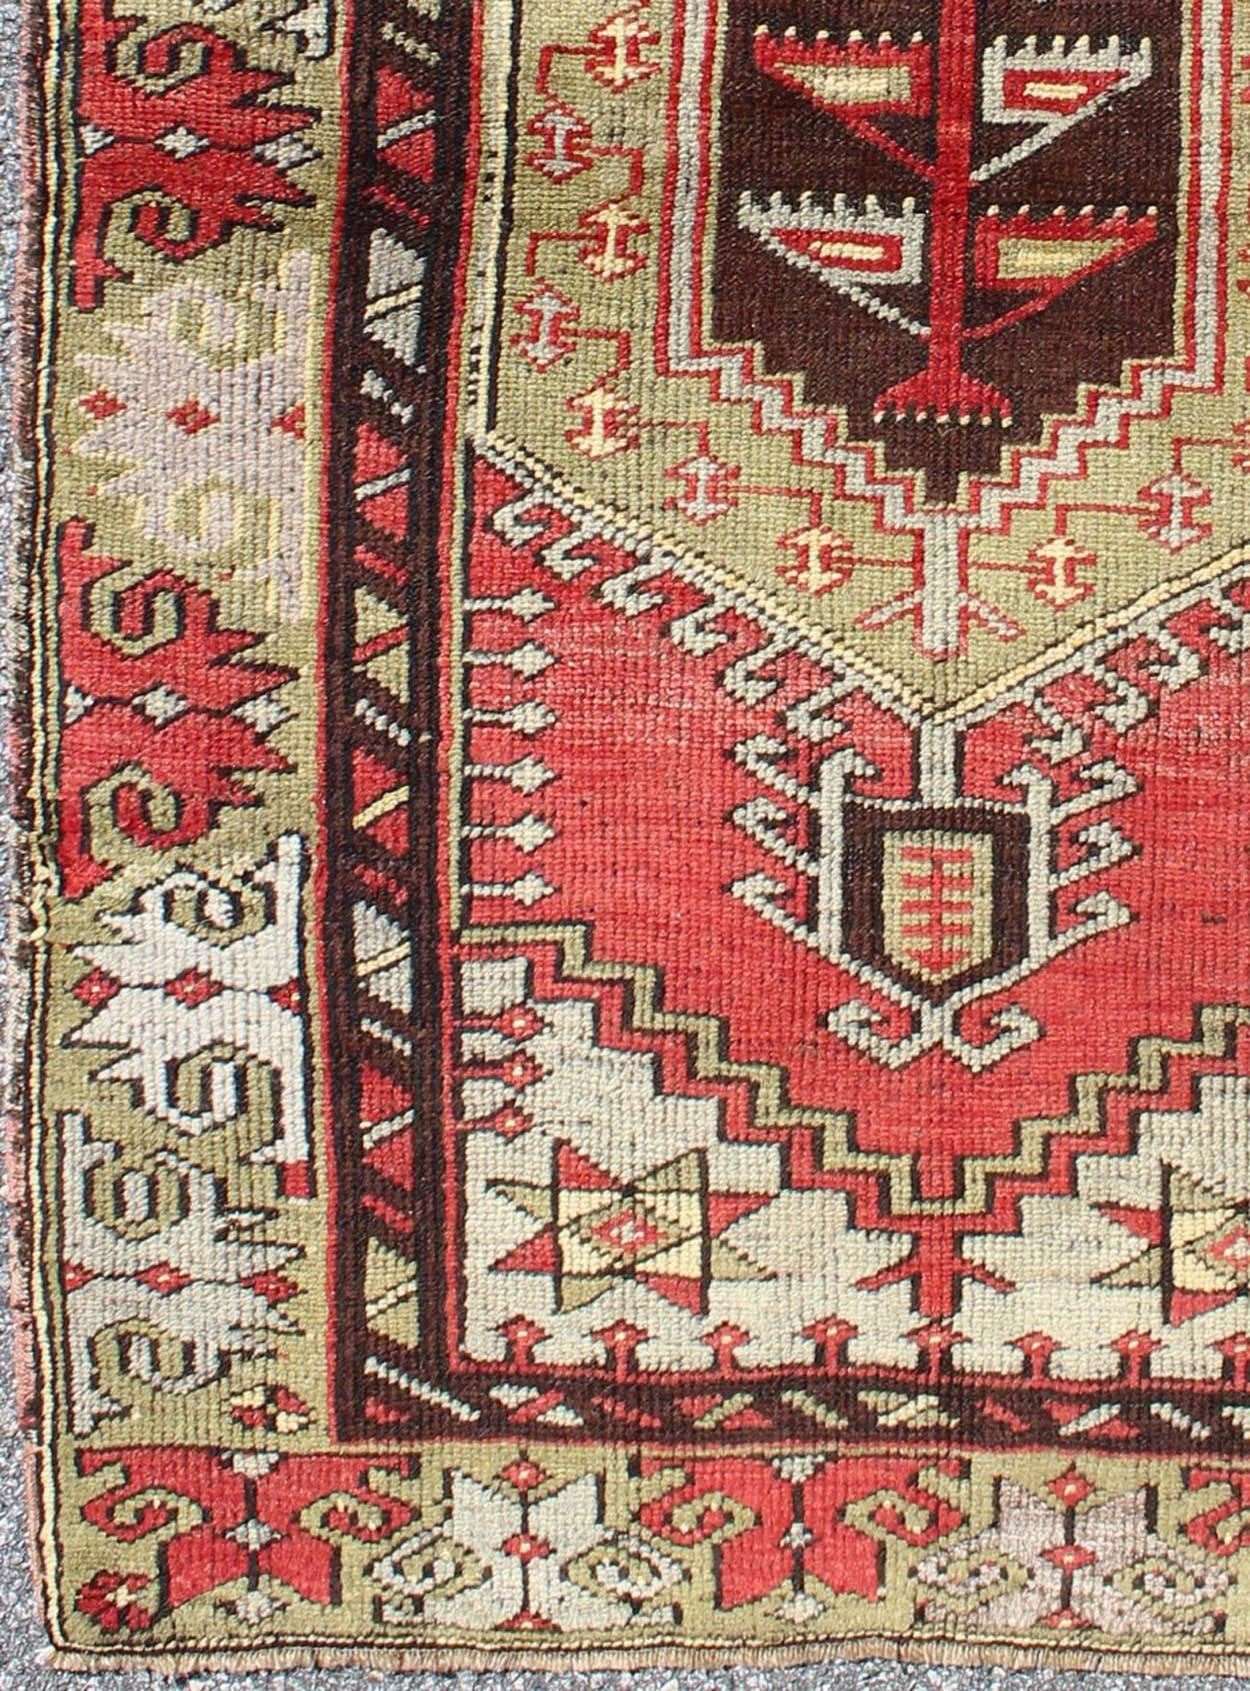 Vintage Turkish Oushak rug with geometric tribal medallion in red and green, Keivan Woven Arts/ rug # TU-DUR-3458, country of origin / type: Turkey / Oushak, circa mid-20th century.

Measures: 2'11 x 5'.

This vintage Turkish Oushak carpet, (circa